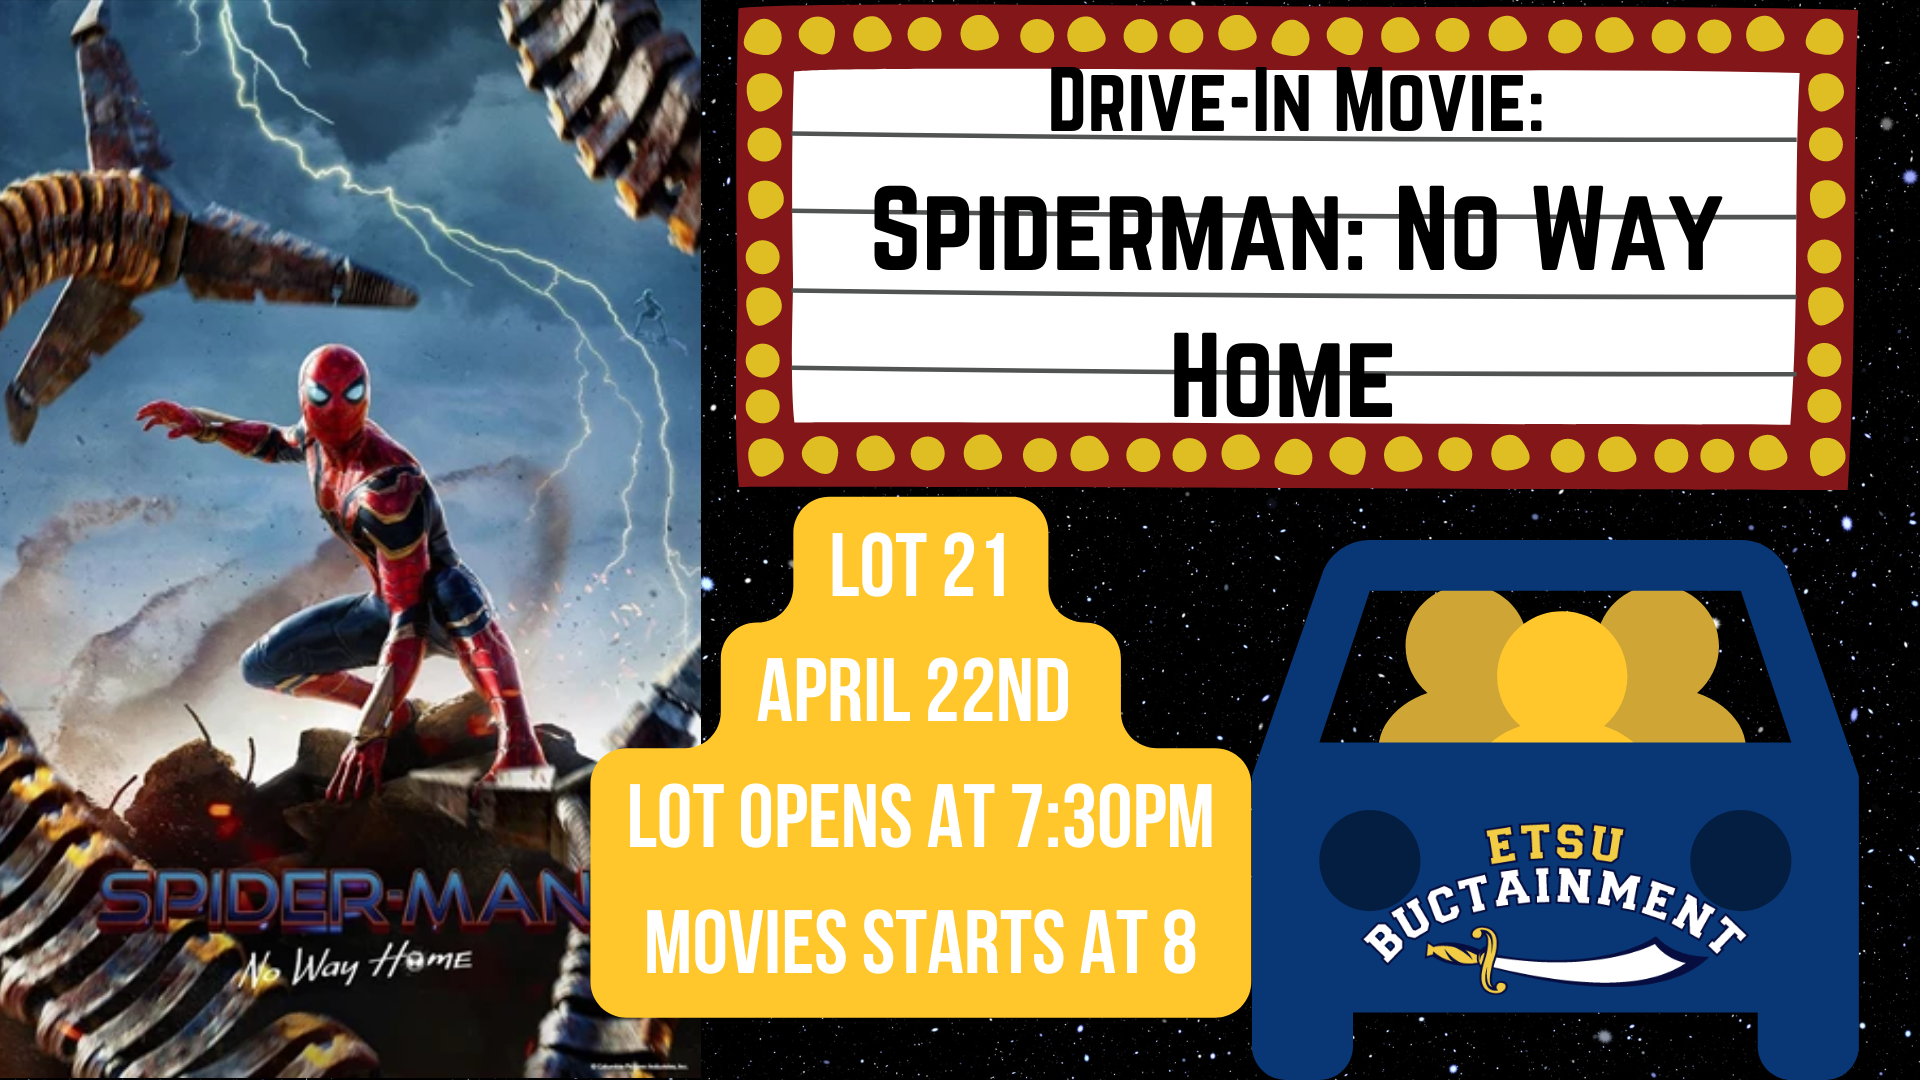 05 Campus Life - Drive-In Movie: Spider Man: No Way Home